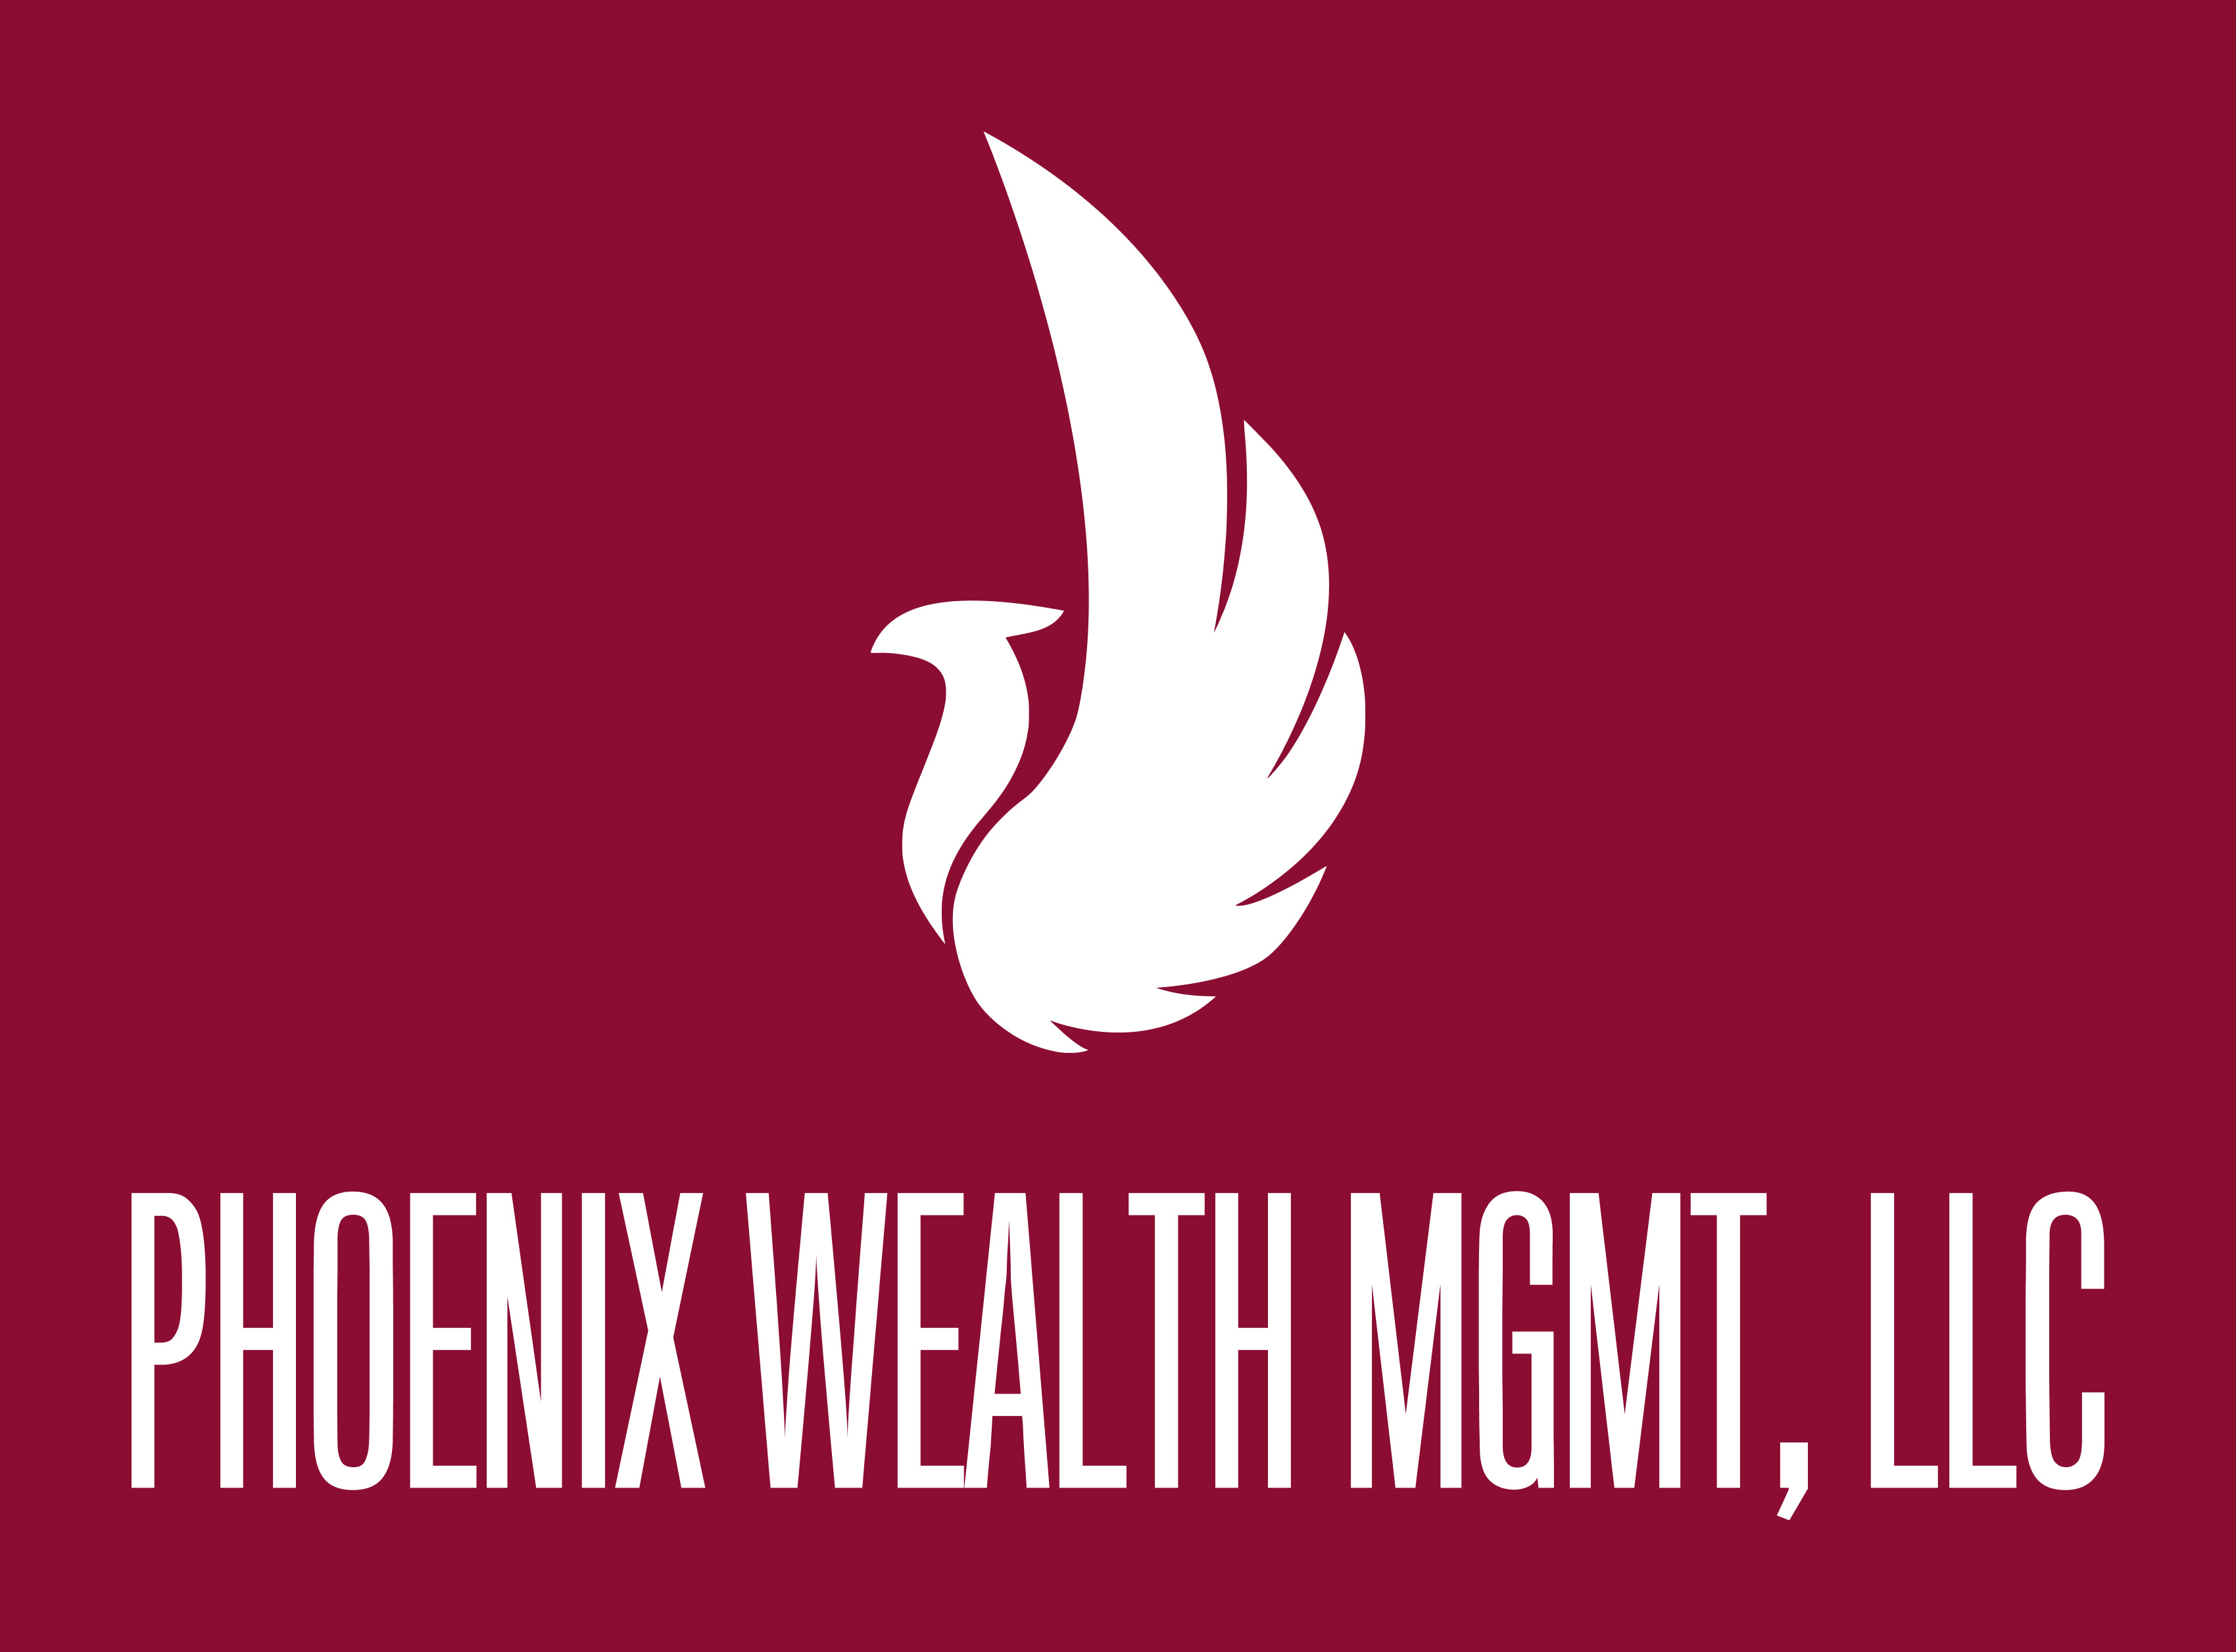 Phoenix Wealth Management, LLC.